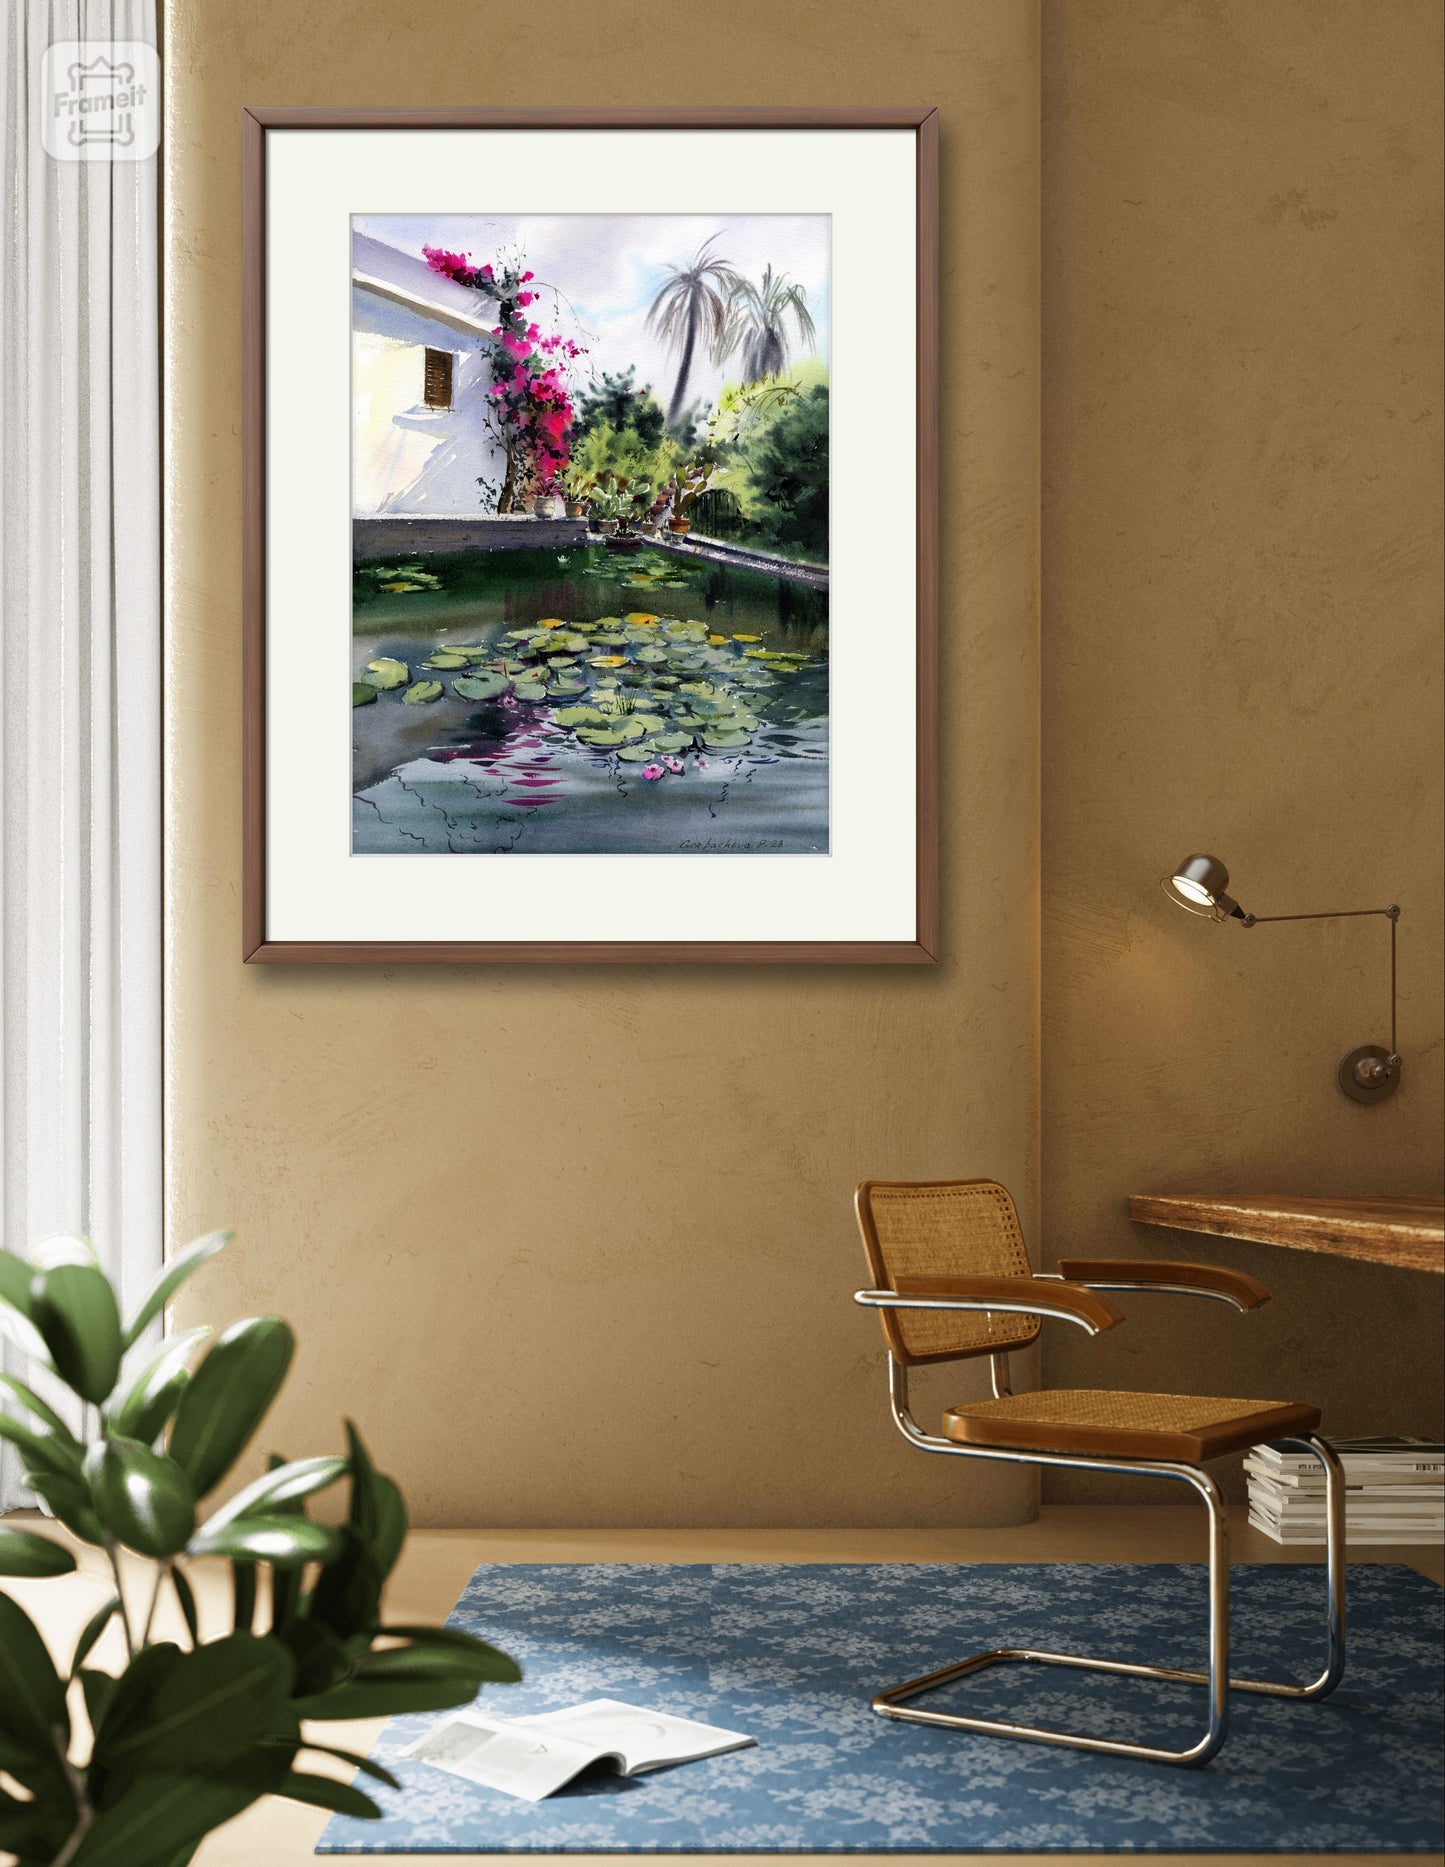 Spanish House Watercolor Prin, Travel Art Gift, European Wall Decor, Mediterranean Backyard, Pond Water Lilies